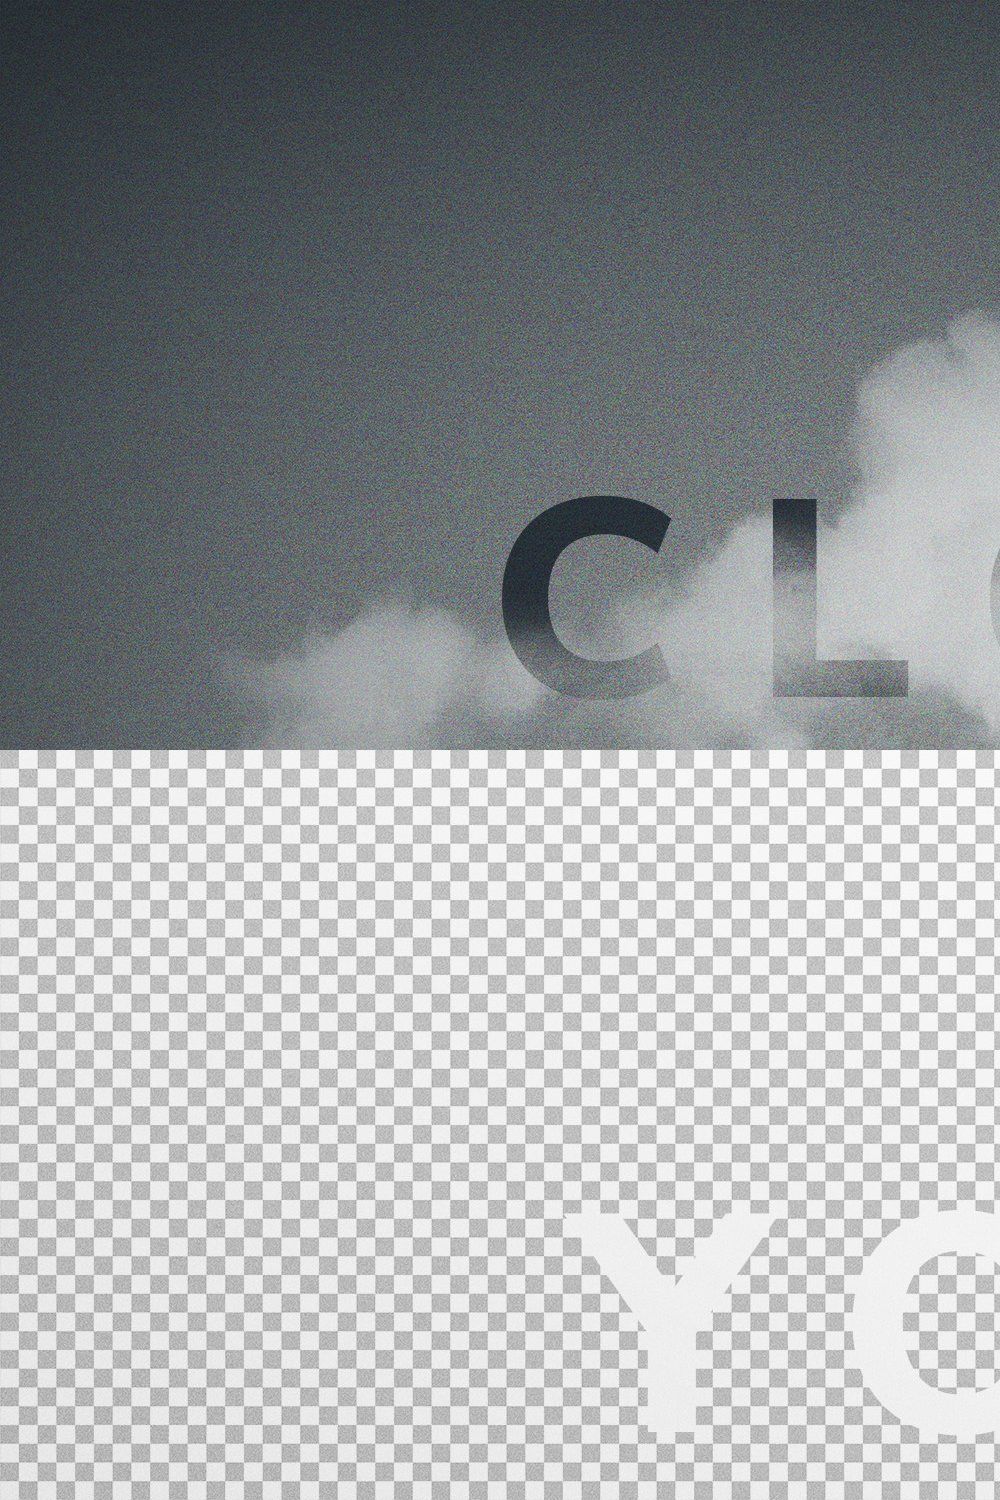 Cloud Text Effect pinterest preview image.